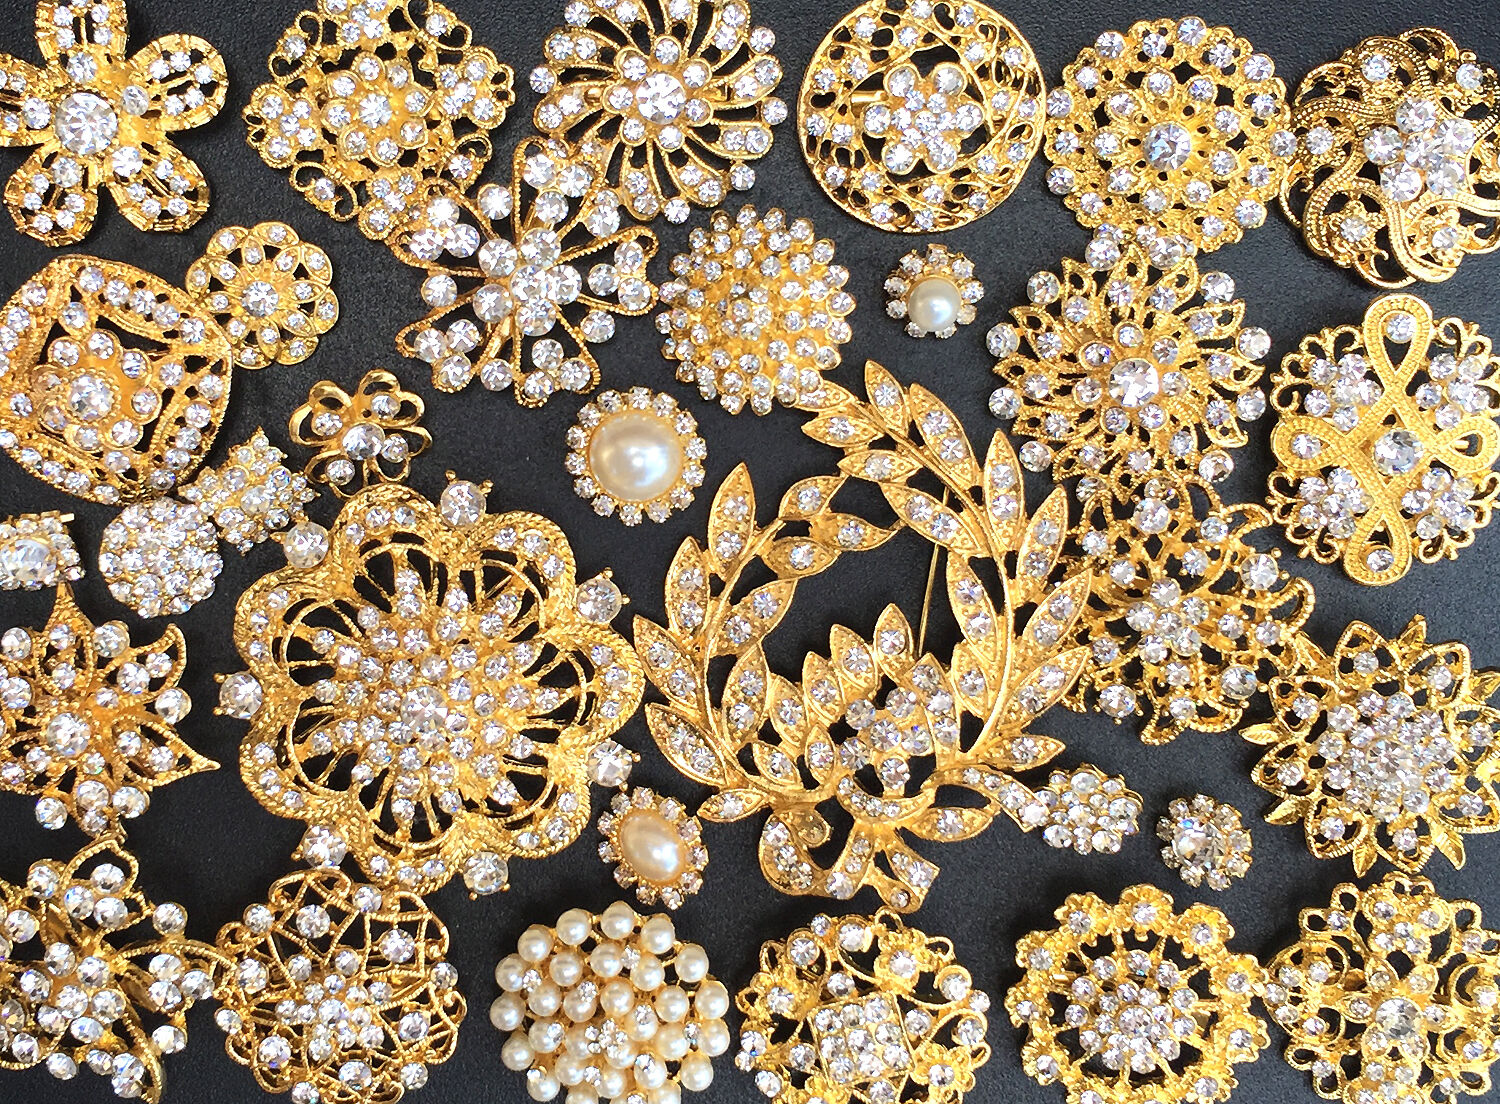 32 Lot Mixed Gold Rhinestone Crystal Button Brooch Pin Wedding Bouquet DIY Kit